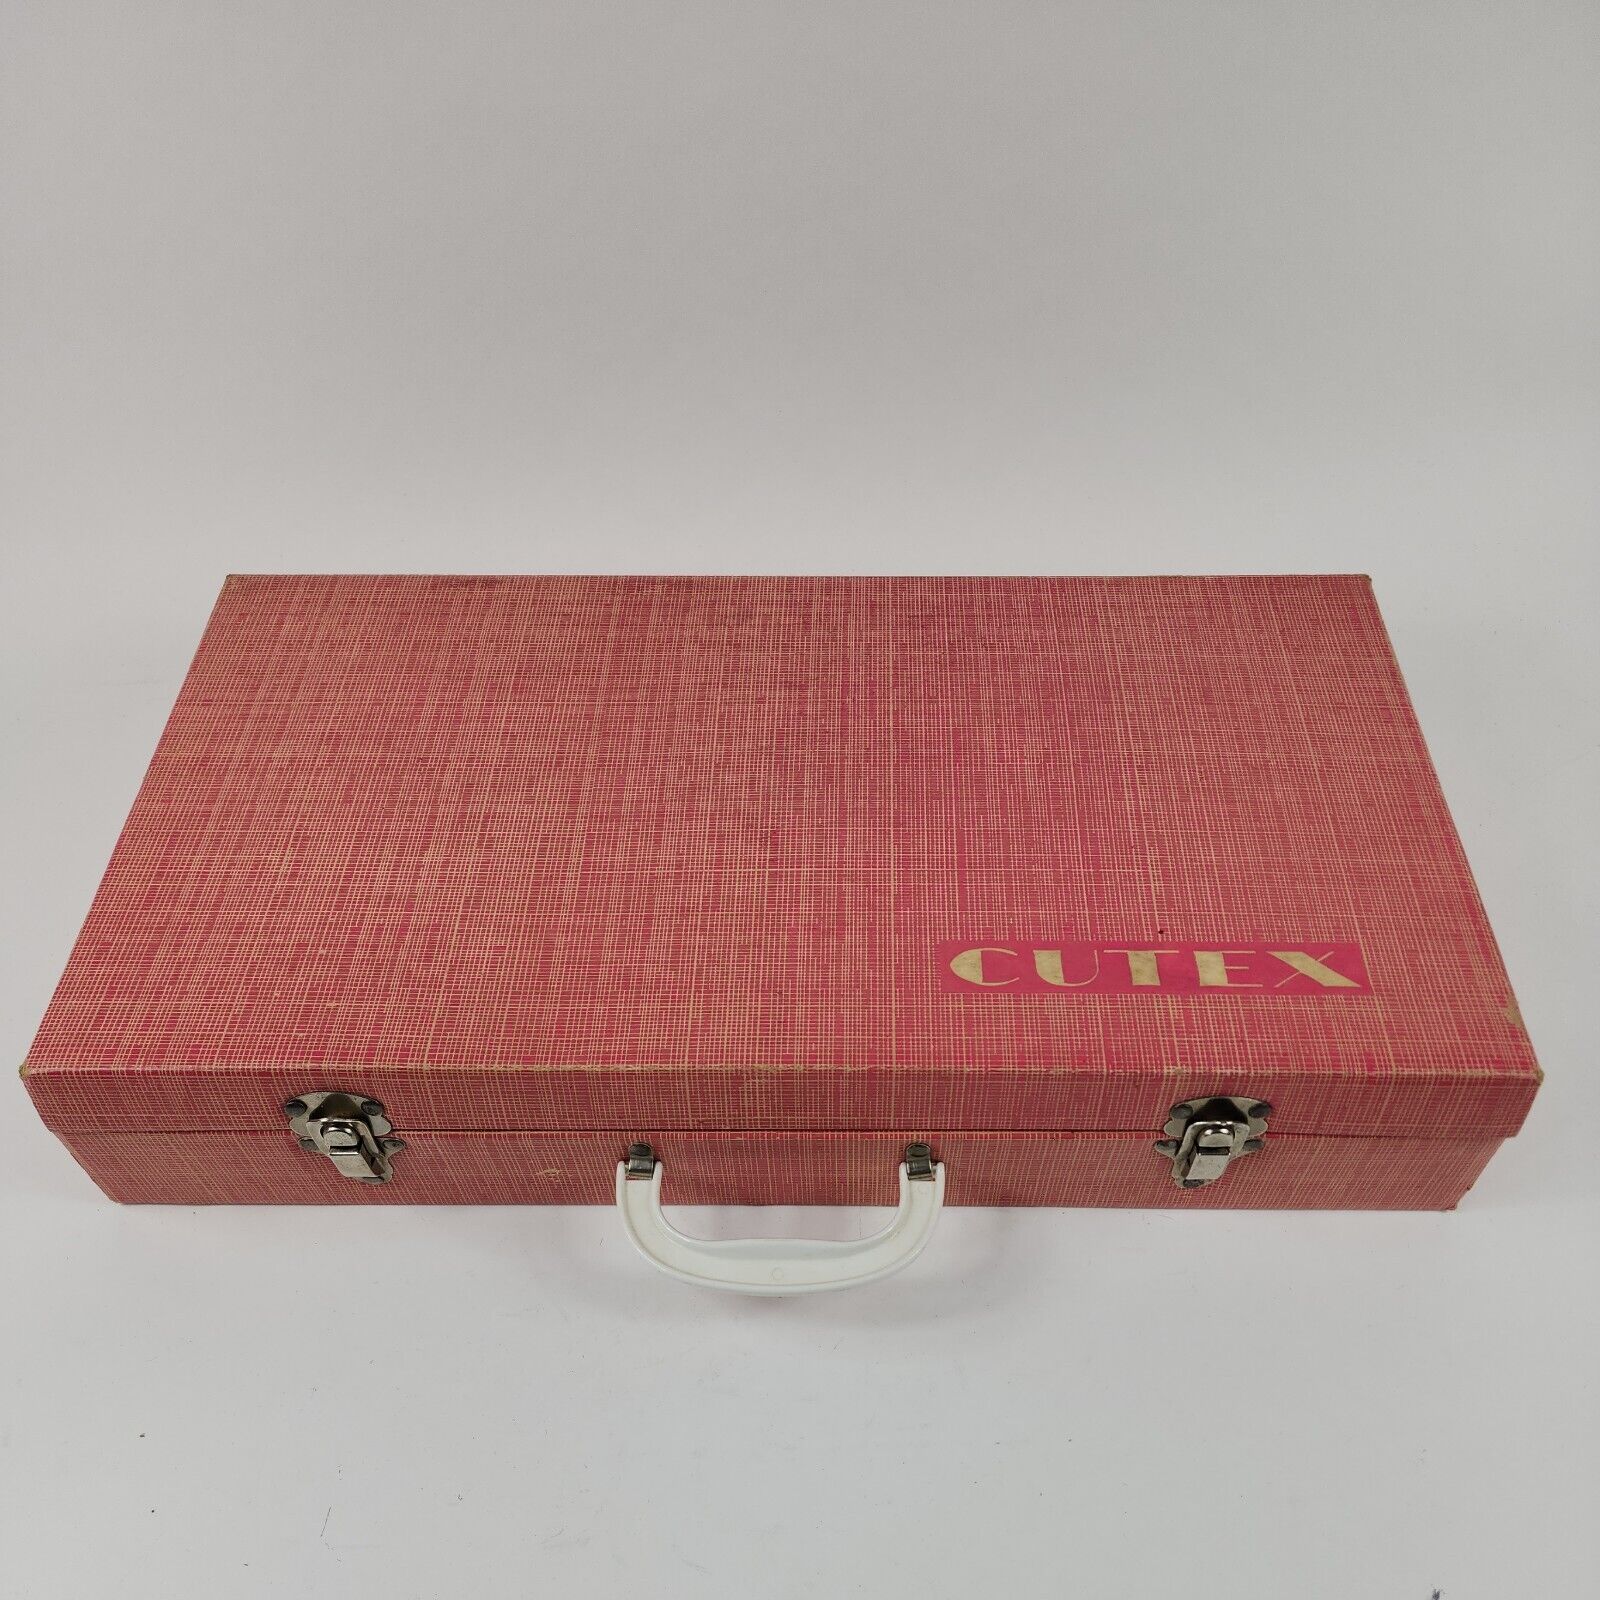 Vintage Cutex nail Display box prop décor suitcase briefcase case beauty salon